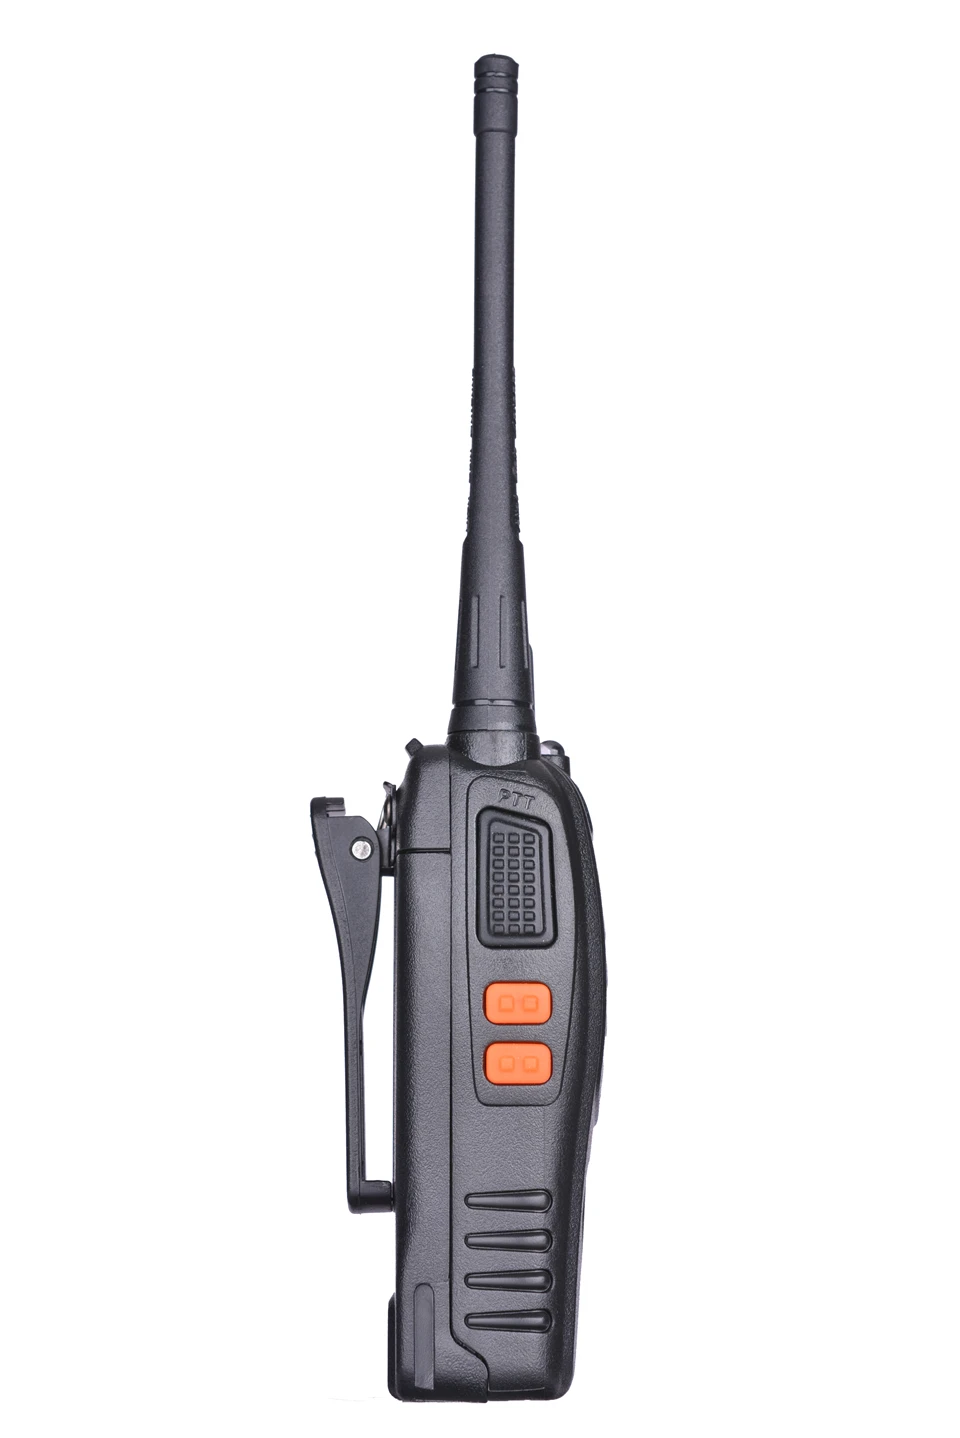 5 шт. Baofeng BF-888s рация UHF Handy Talky BF 888s 5 Вт Wolki Tolki 888 CB радио Comunicador PTT рация трансивер